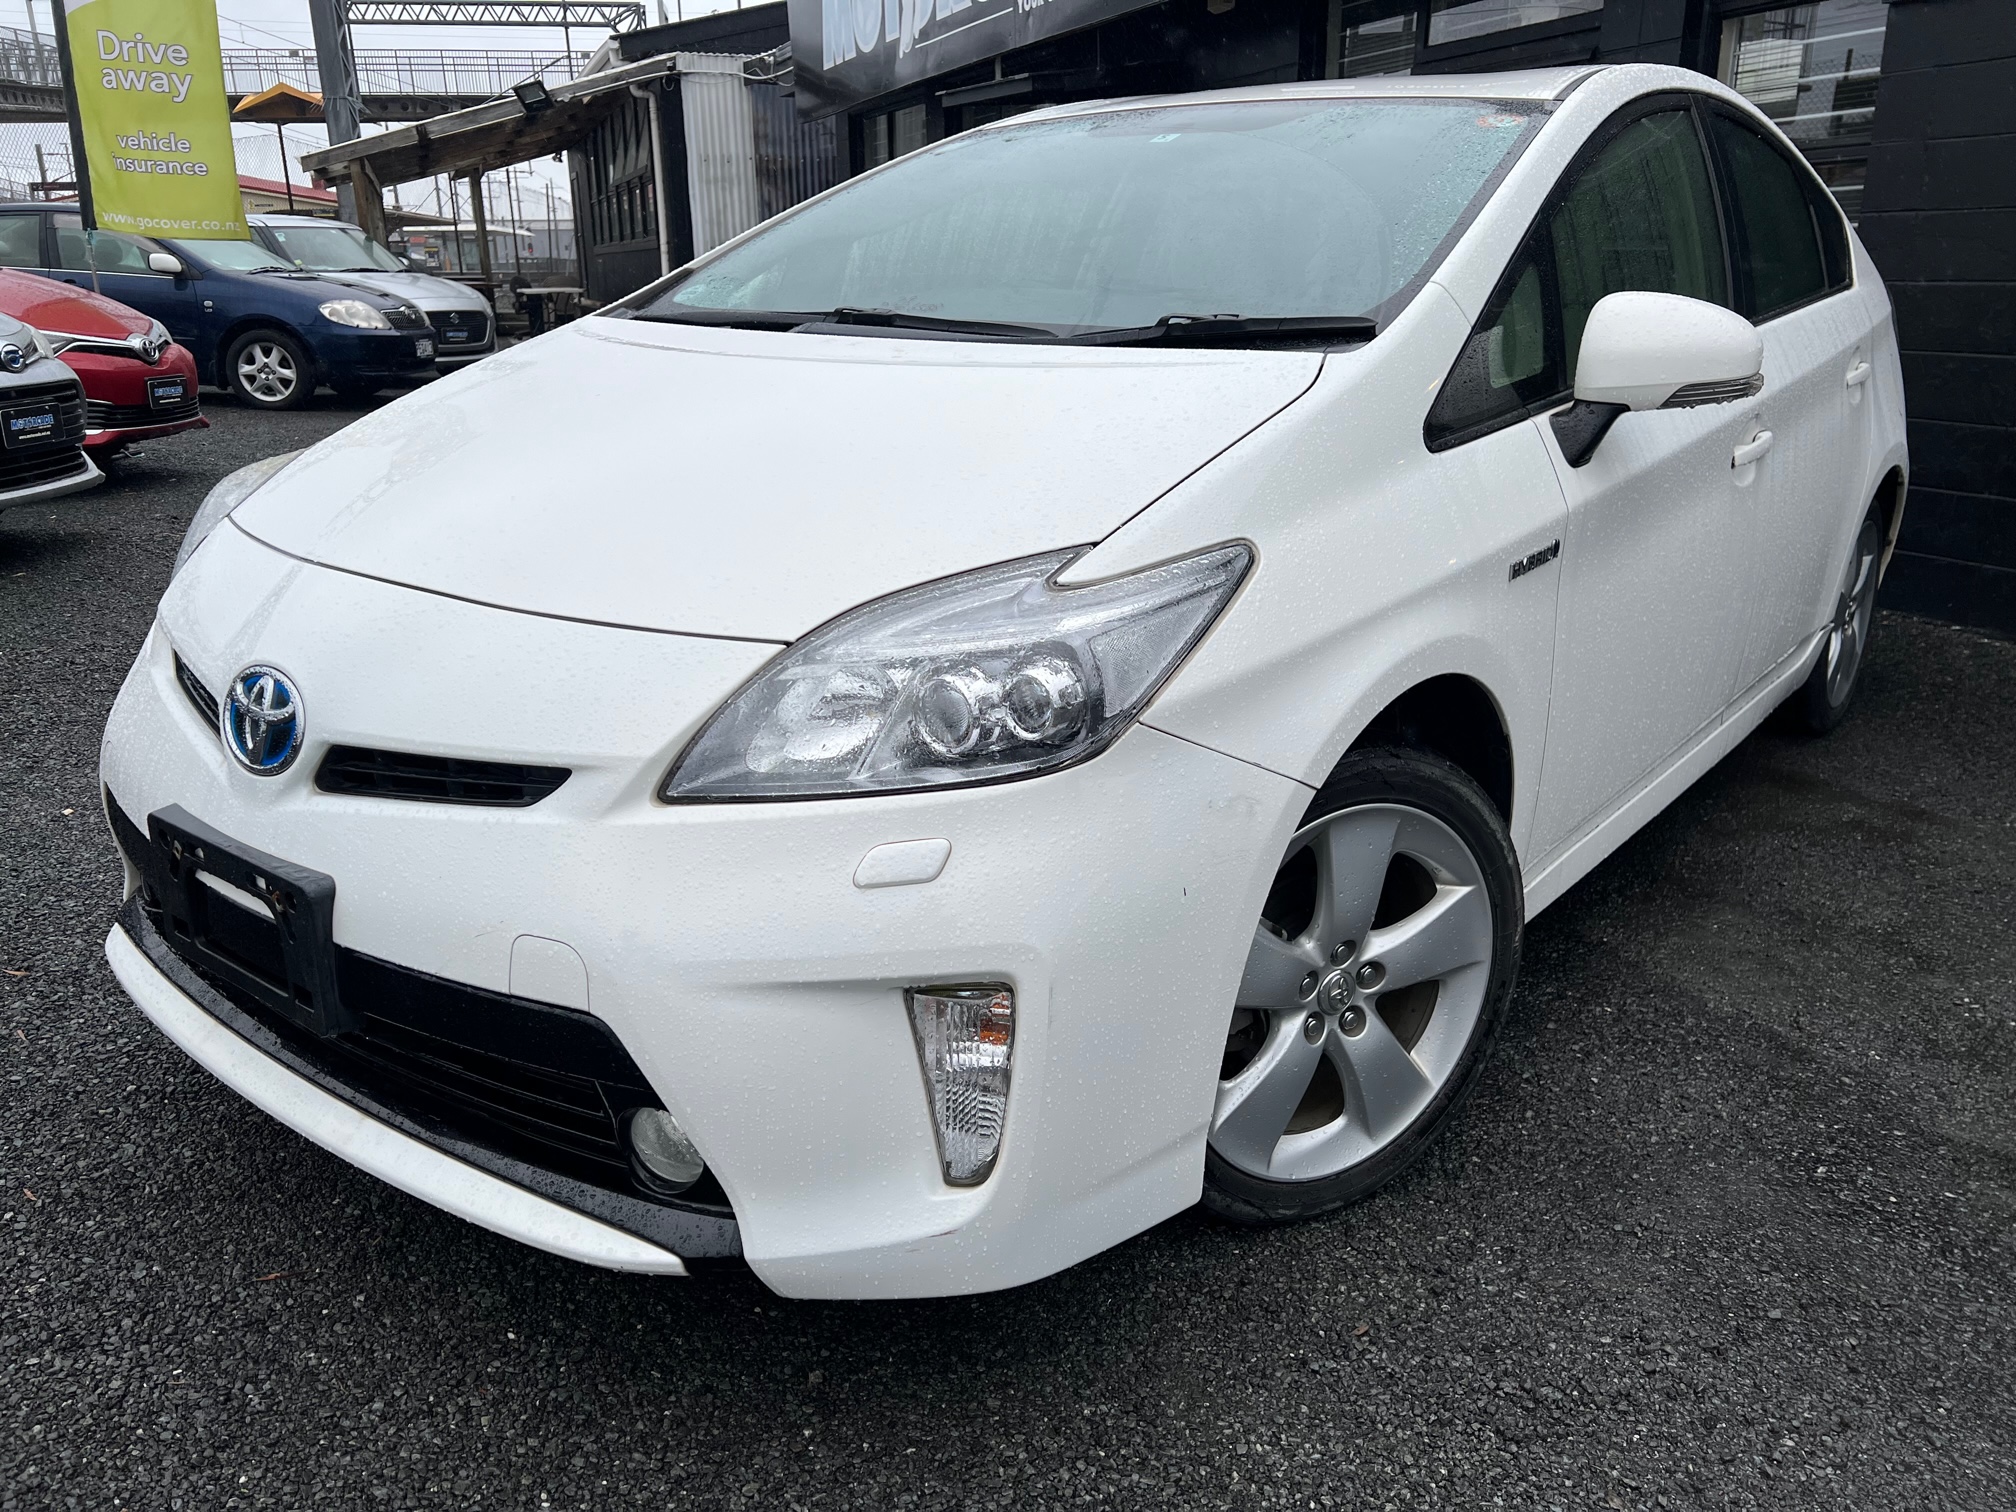 Toyota Prius 2014 Image 1